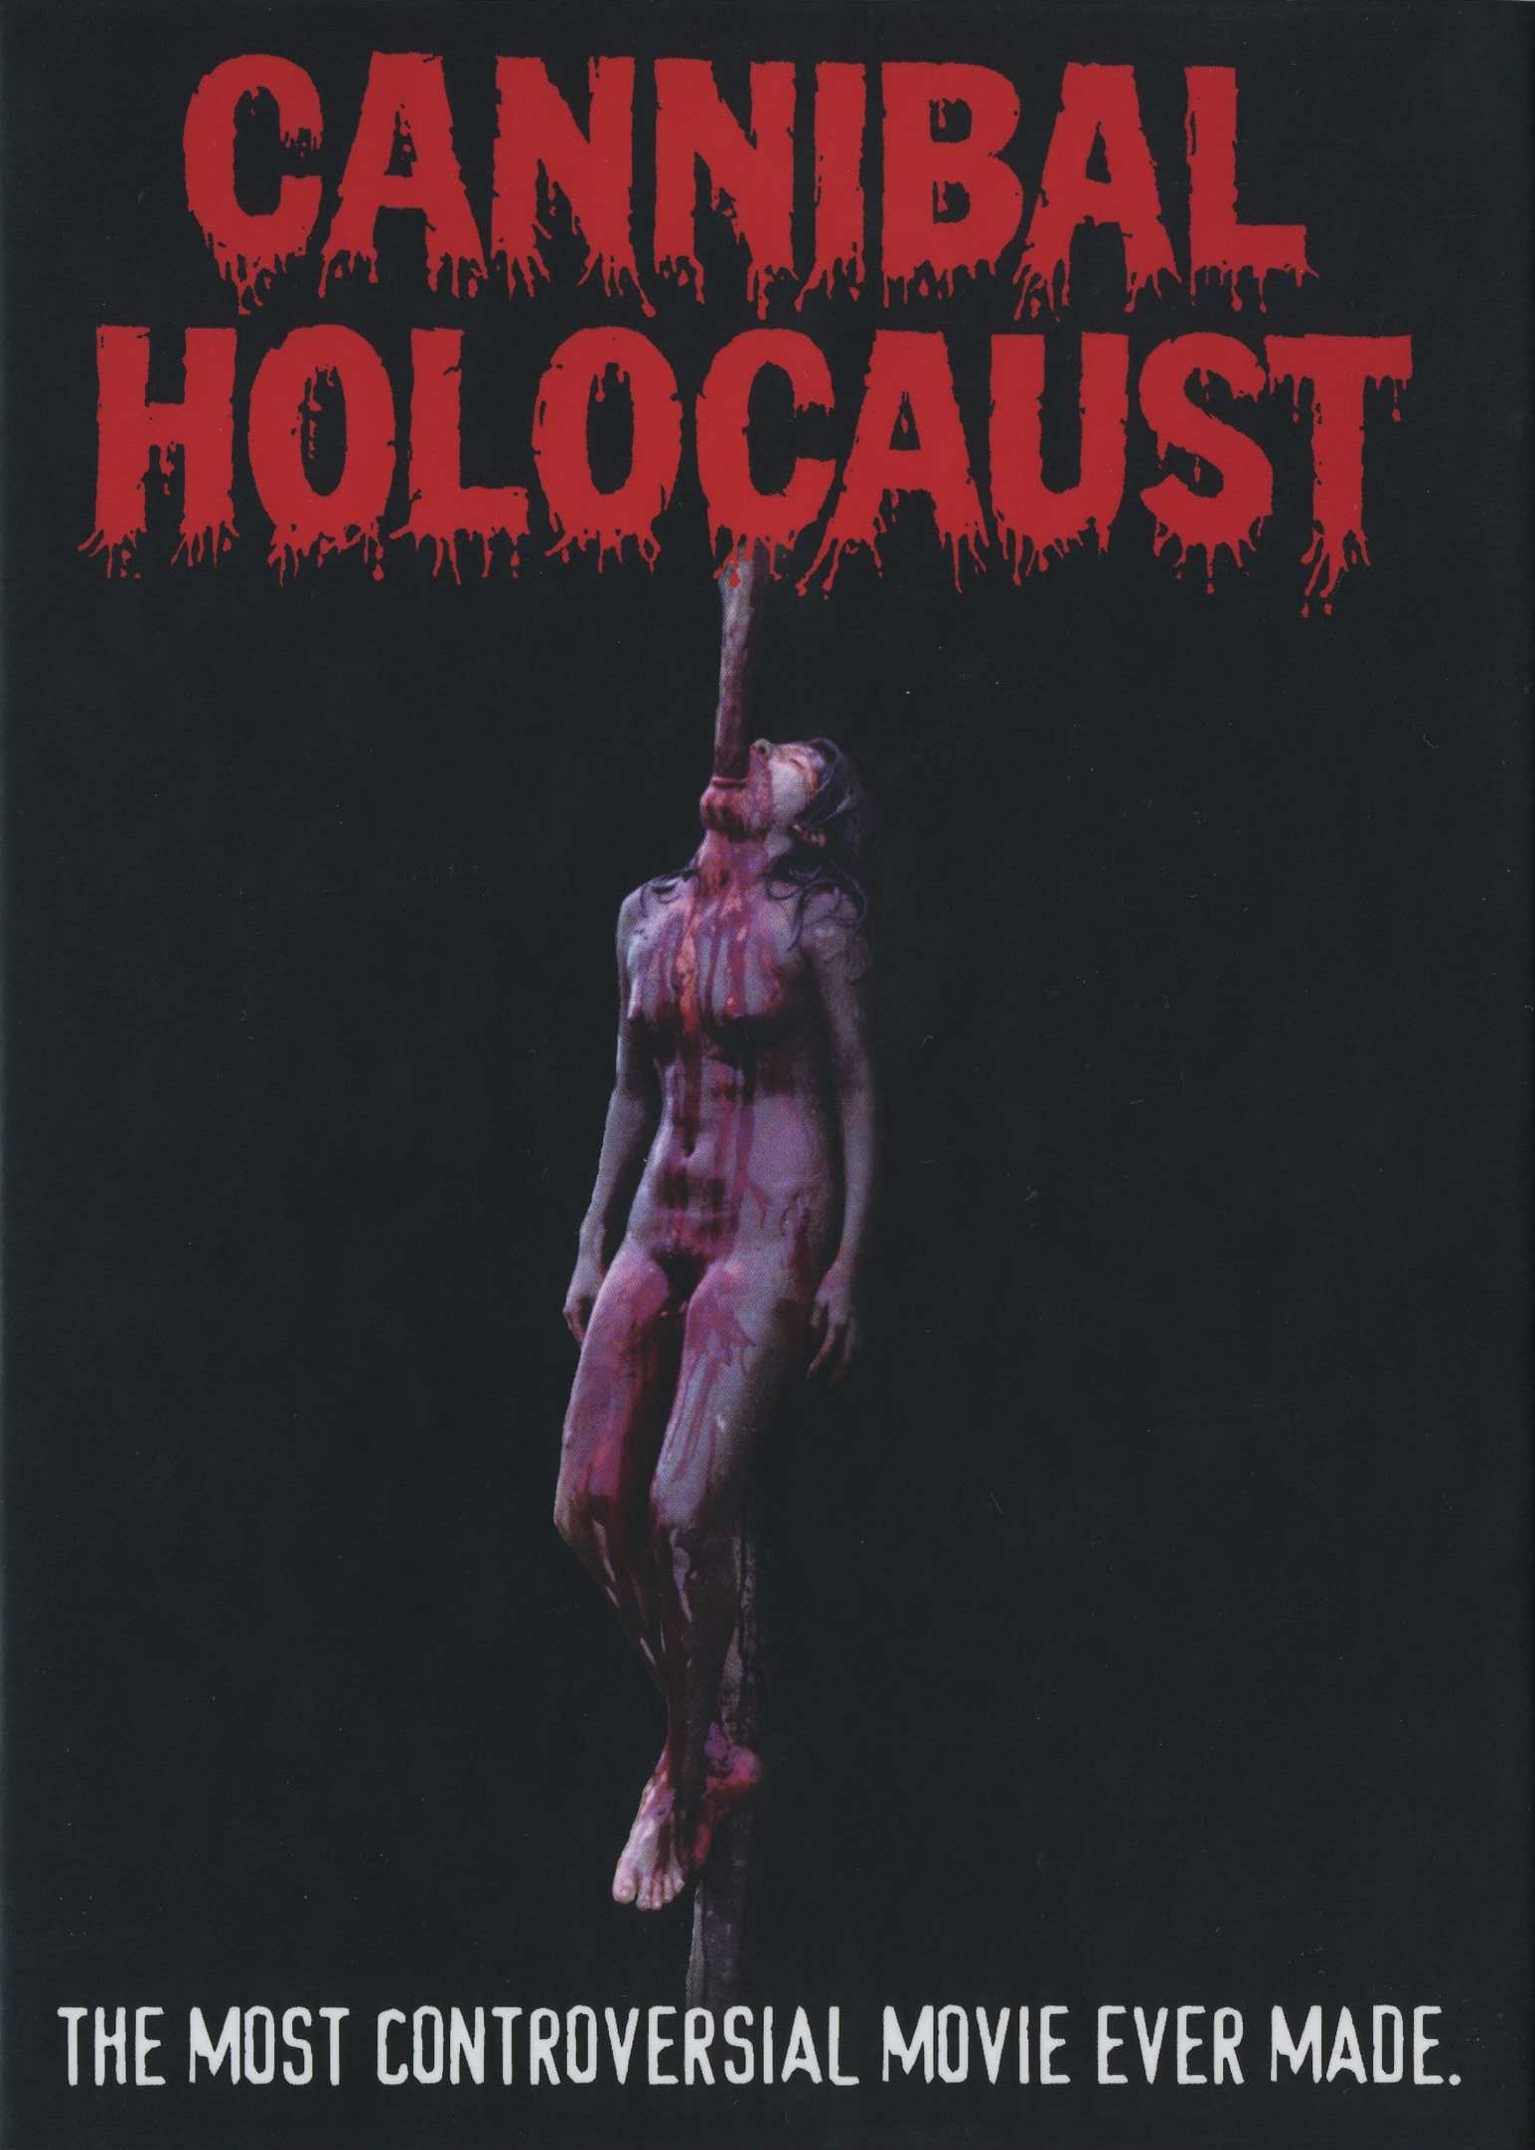 Cannibal Holocaust เปรตเดินดินกินเนื้อคน